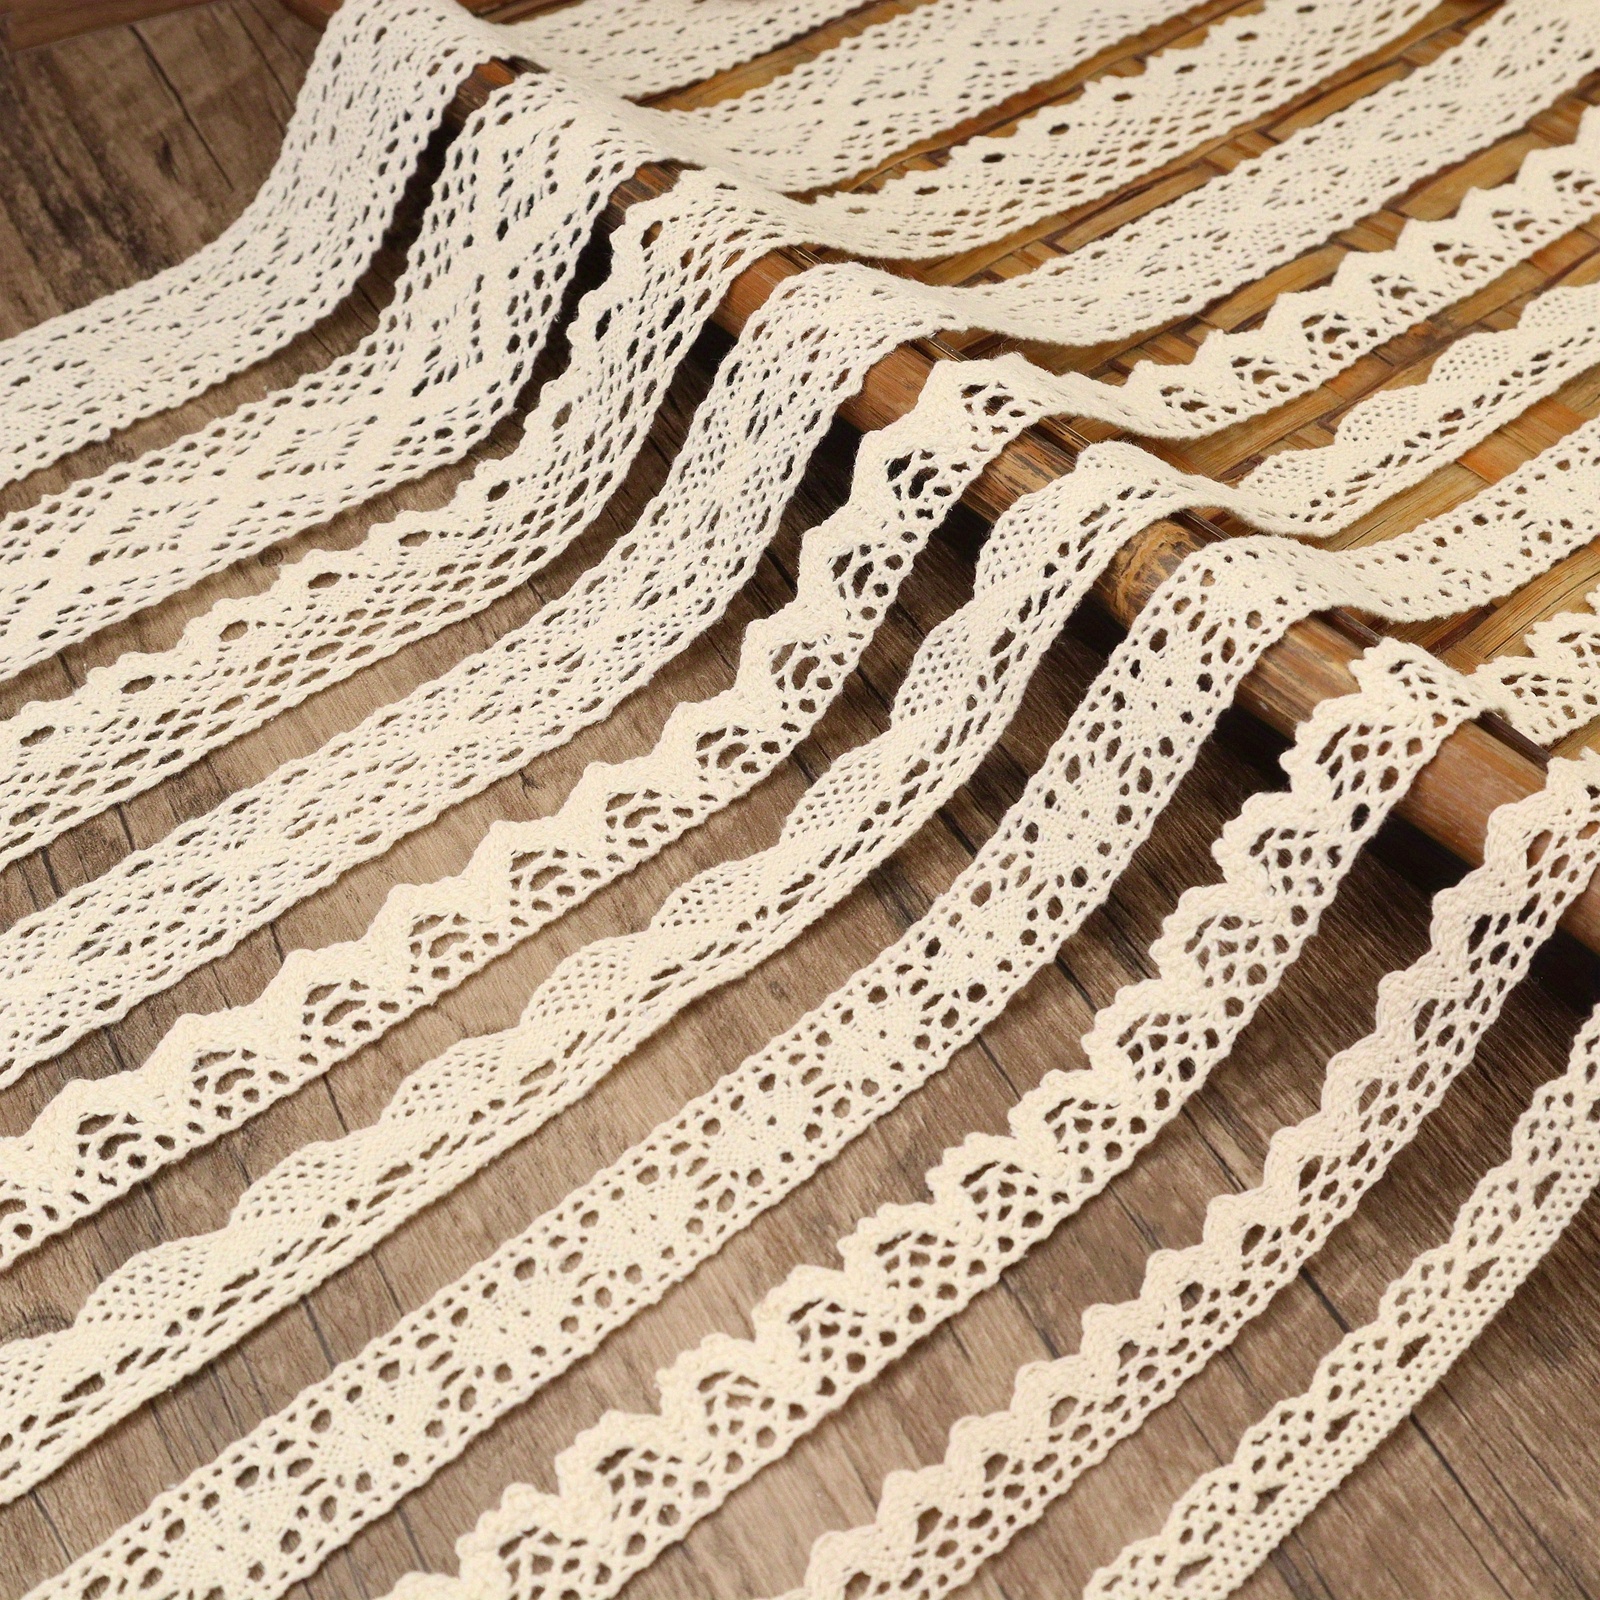 IDONGCAI Beige Cotton Lace Trim Lace Ribbon Fabric Fringe Trim DIY